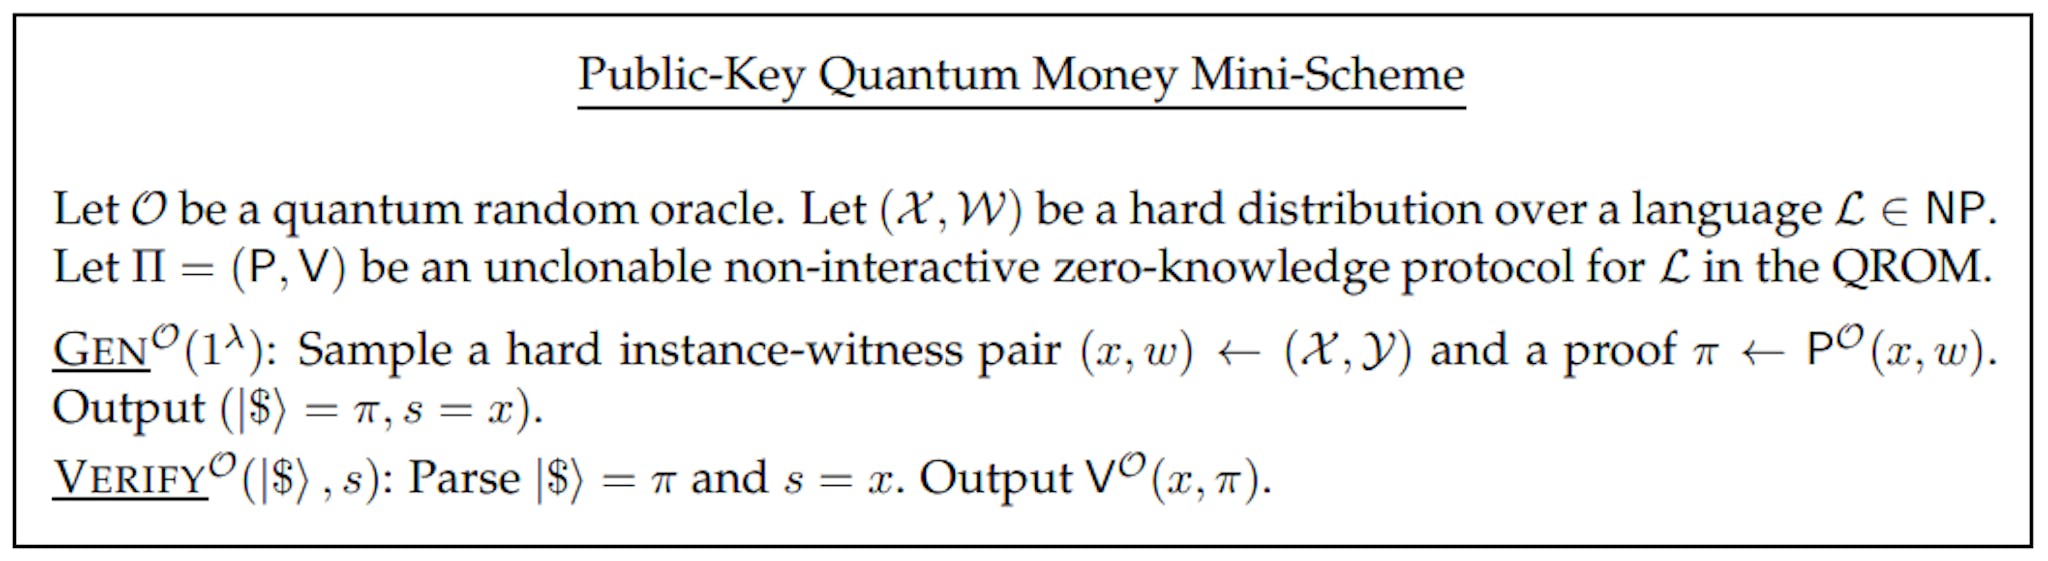 Figure 4: Public-Key Quantum Money Mini-Scheme from an Unclonable Non-Interactive Quantum Protocol